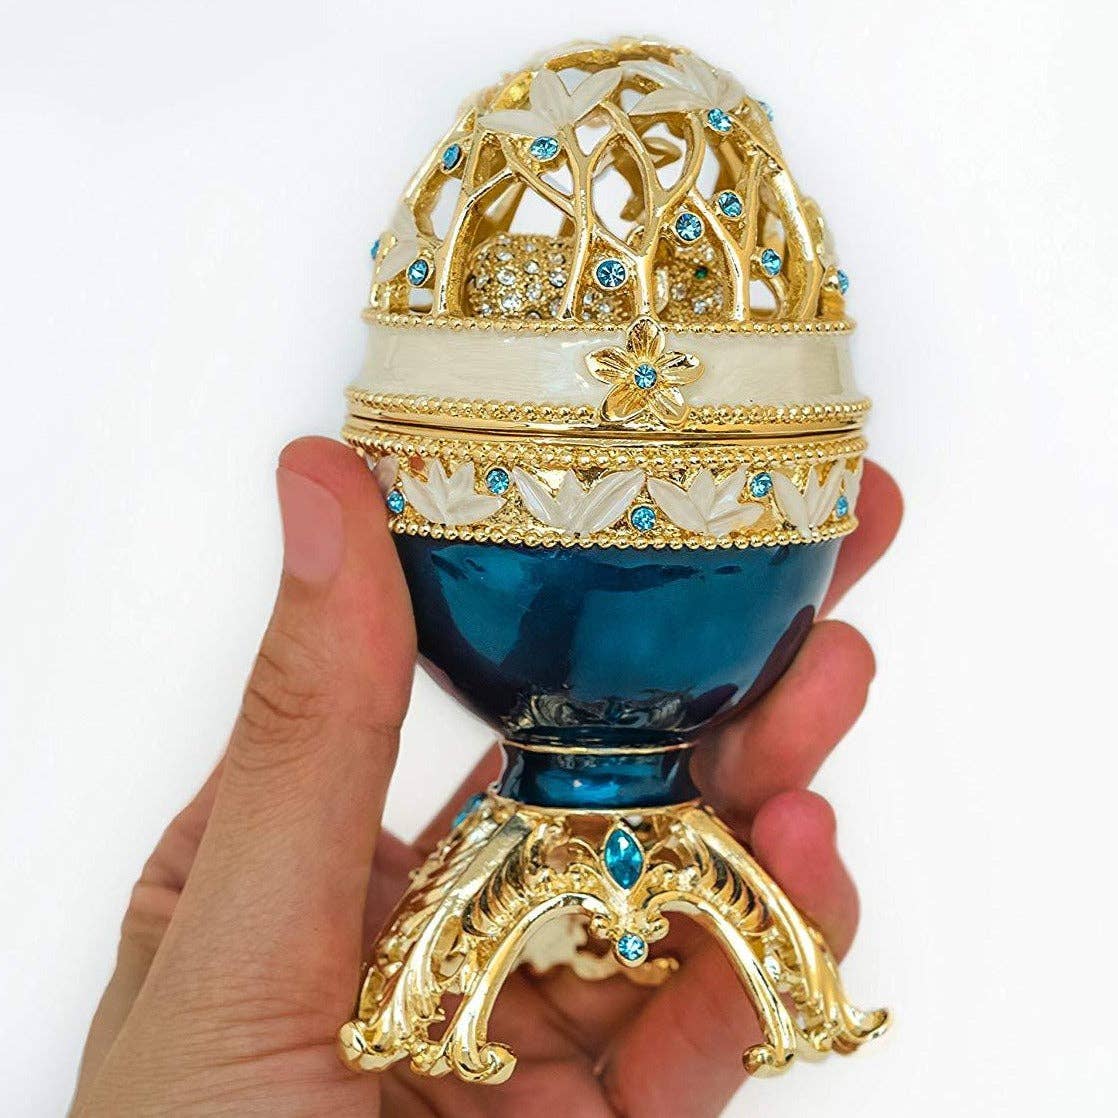 Donkey Faberge trinket box hand made by Keren Kopal w/ Austrian crystal